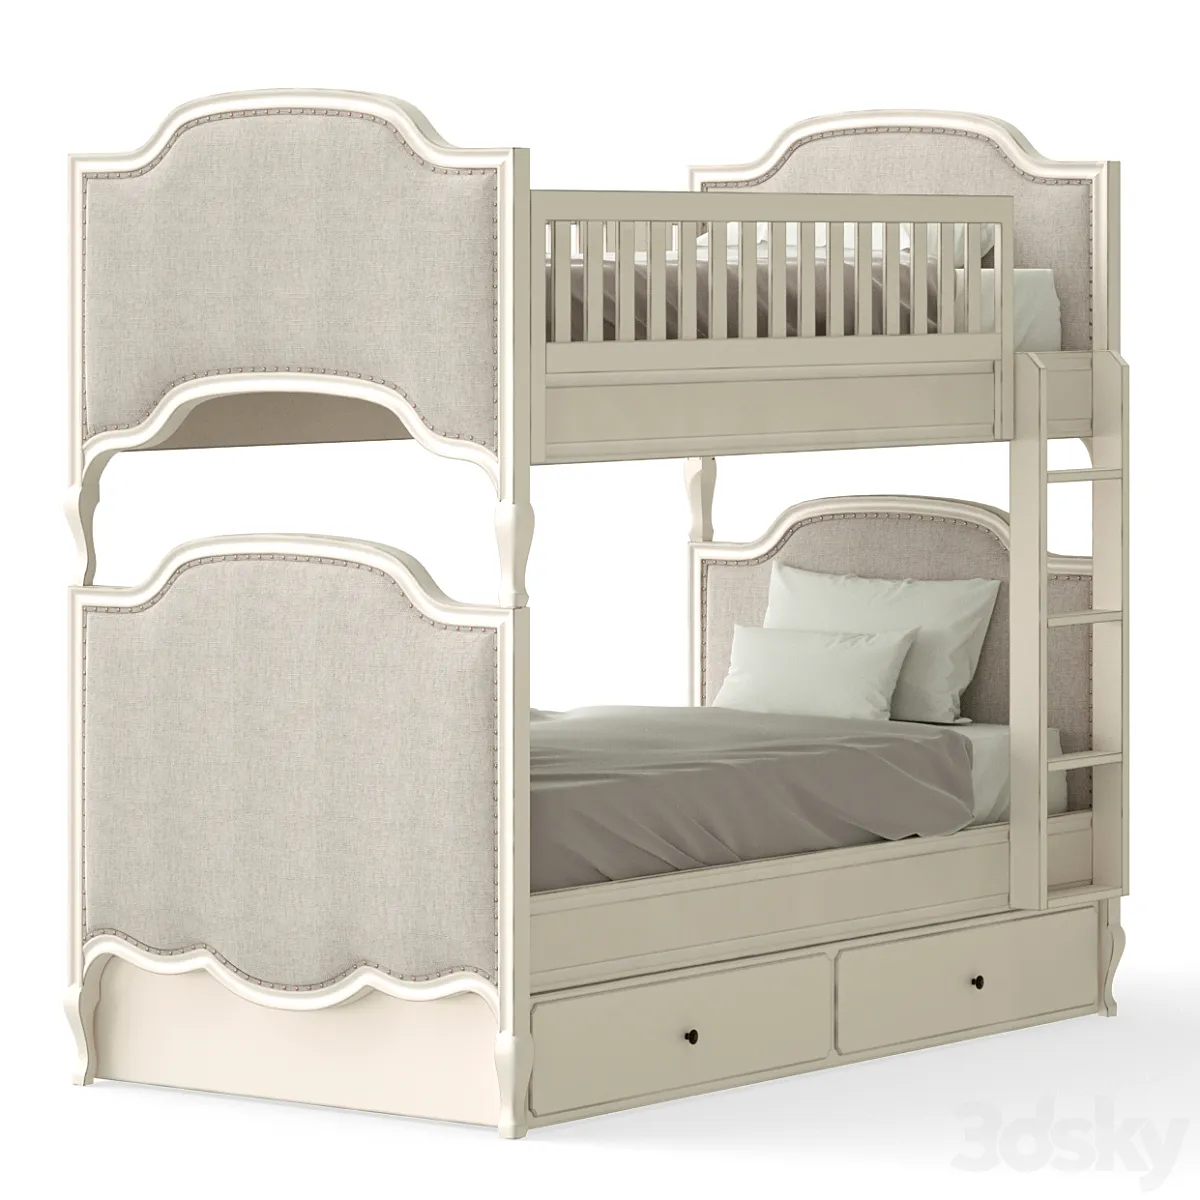 3dsky - Bunk bed in the nursery